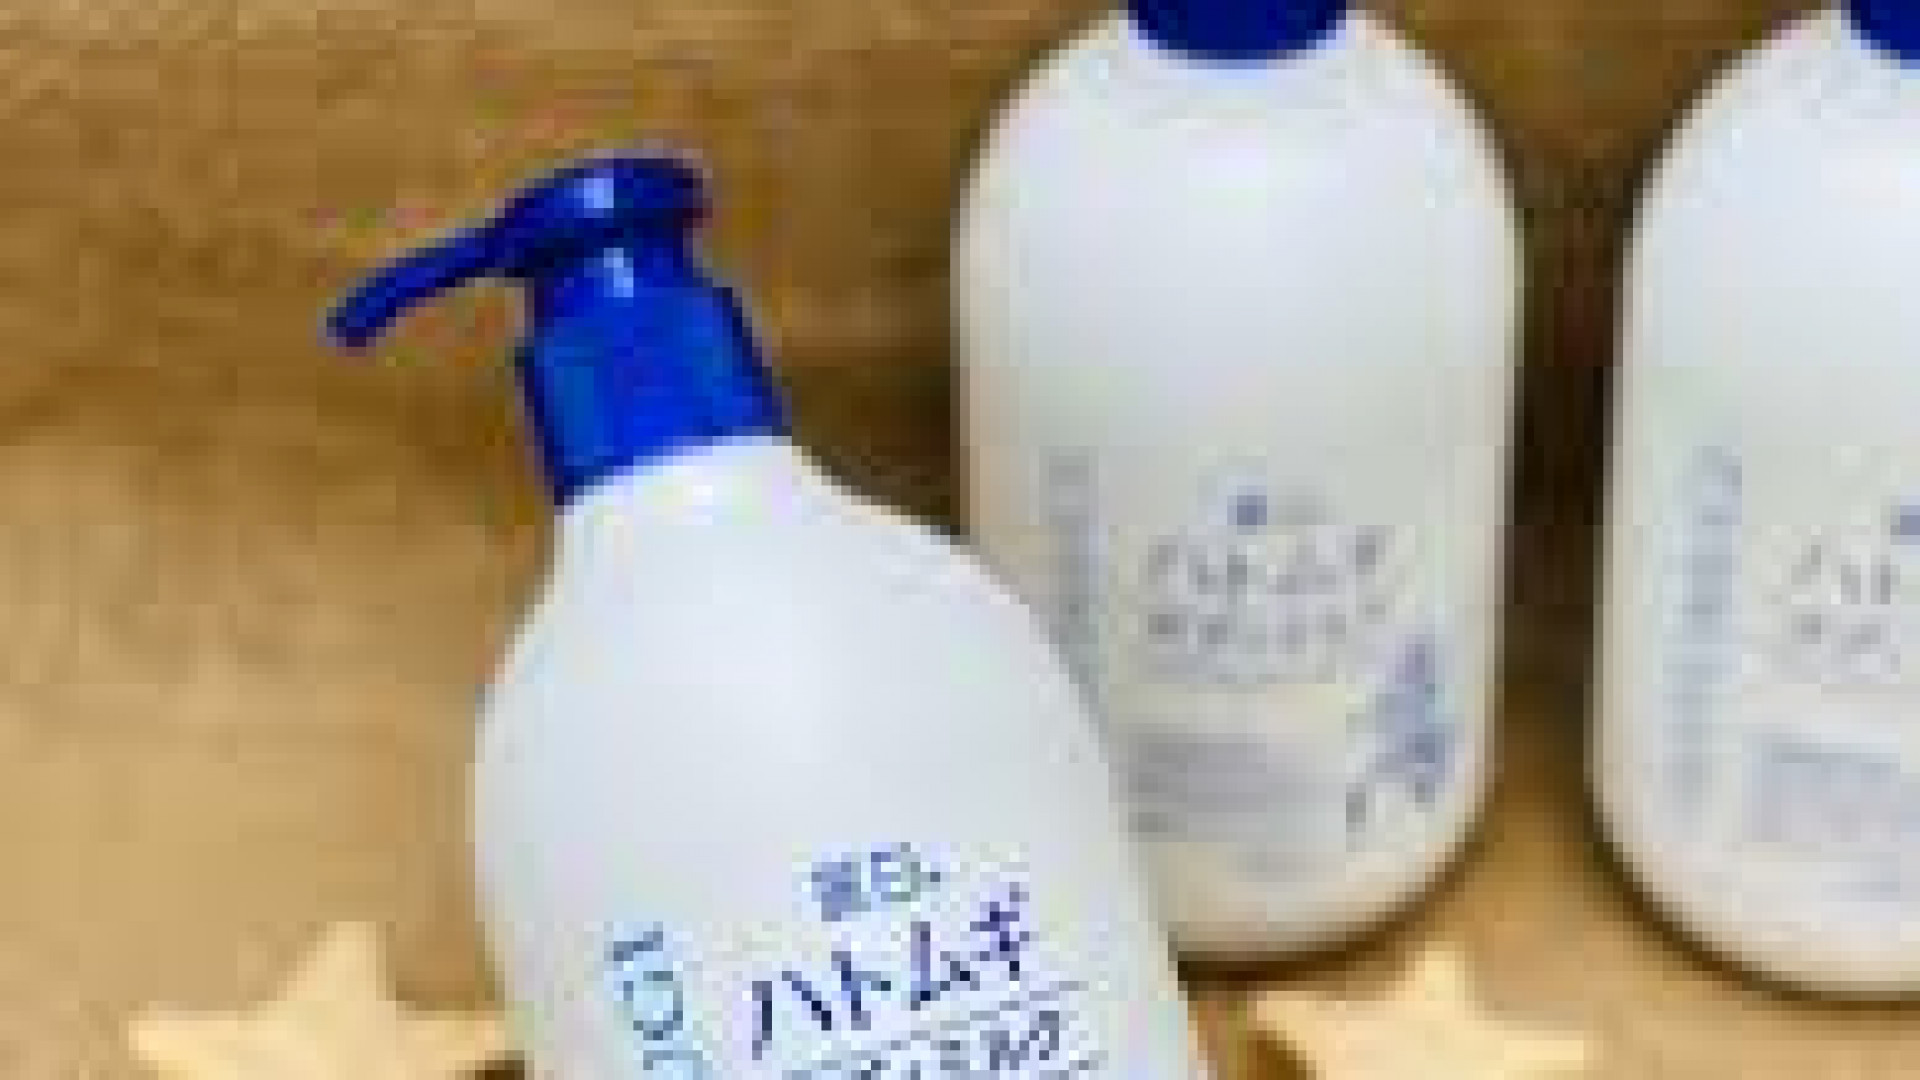 Kumanoyushi Hatomugi Увлажняющее и кондиционирующее молочко для тела 400 ml